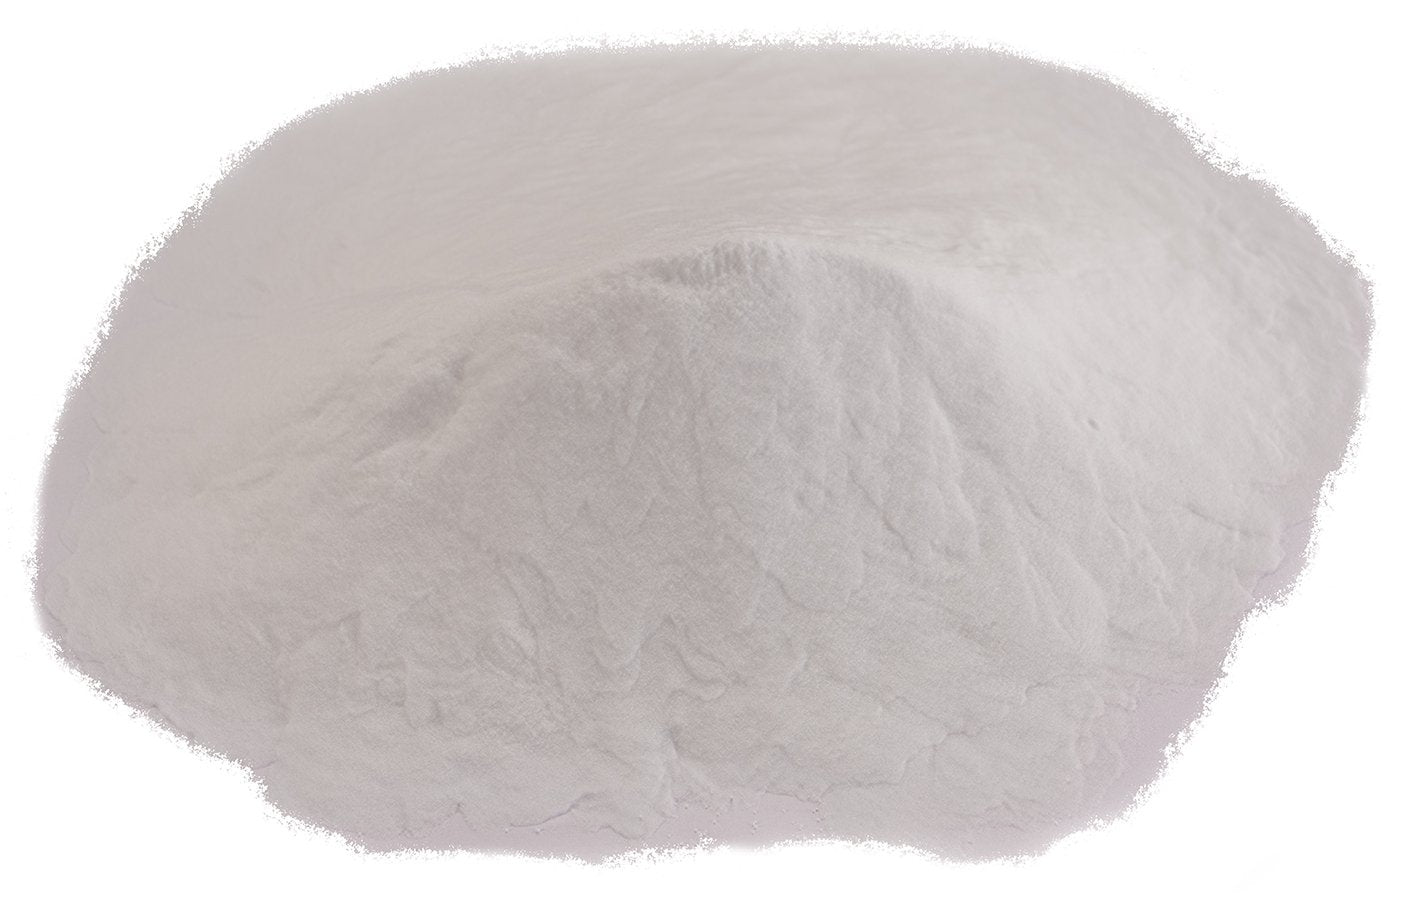 30 Kg White granular silica gel - bulk - drum